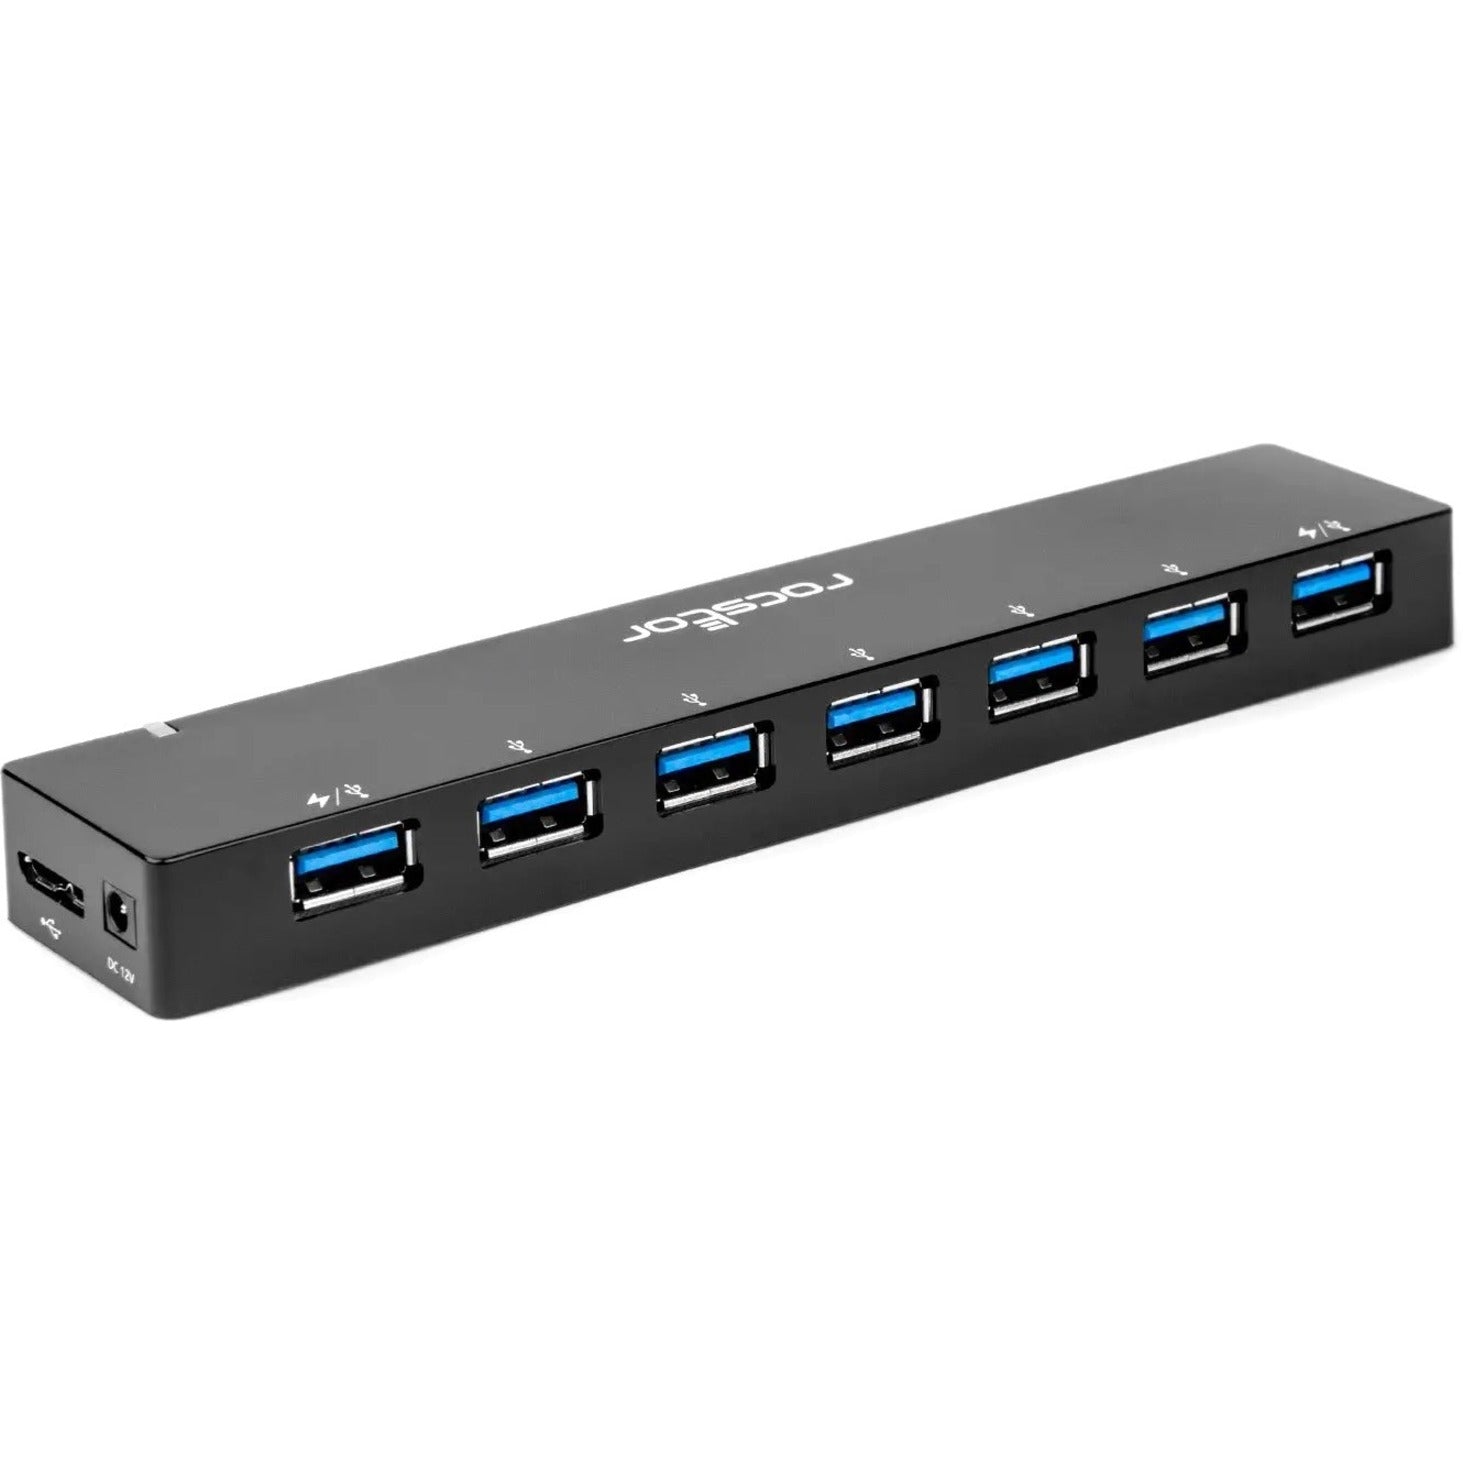 Rocstor Y10P003-B1 7-port USB Hub, Expand Your USB Connectivity Effortlessly